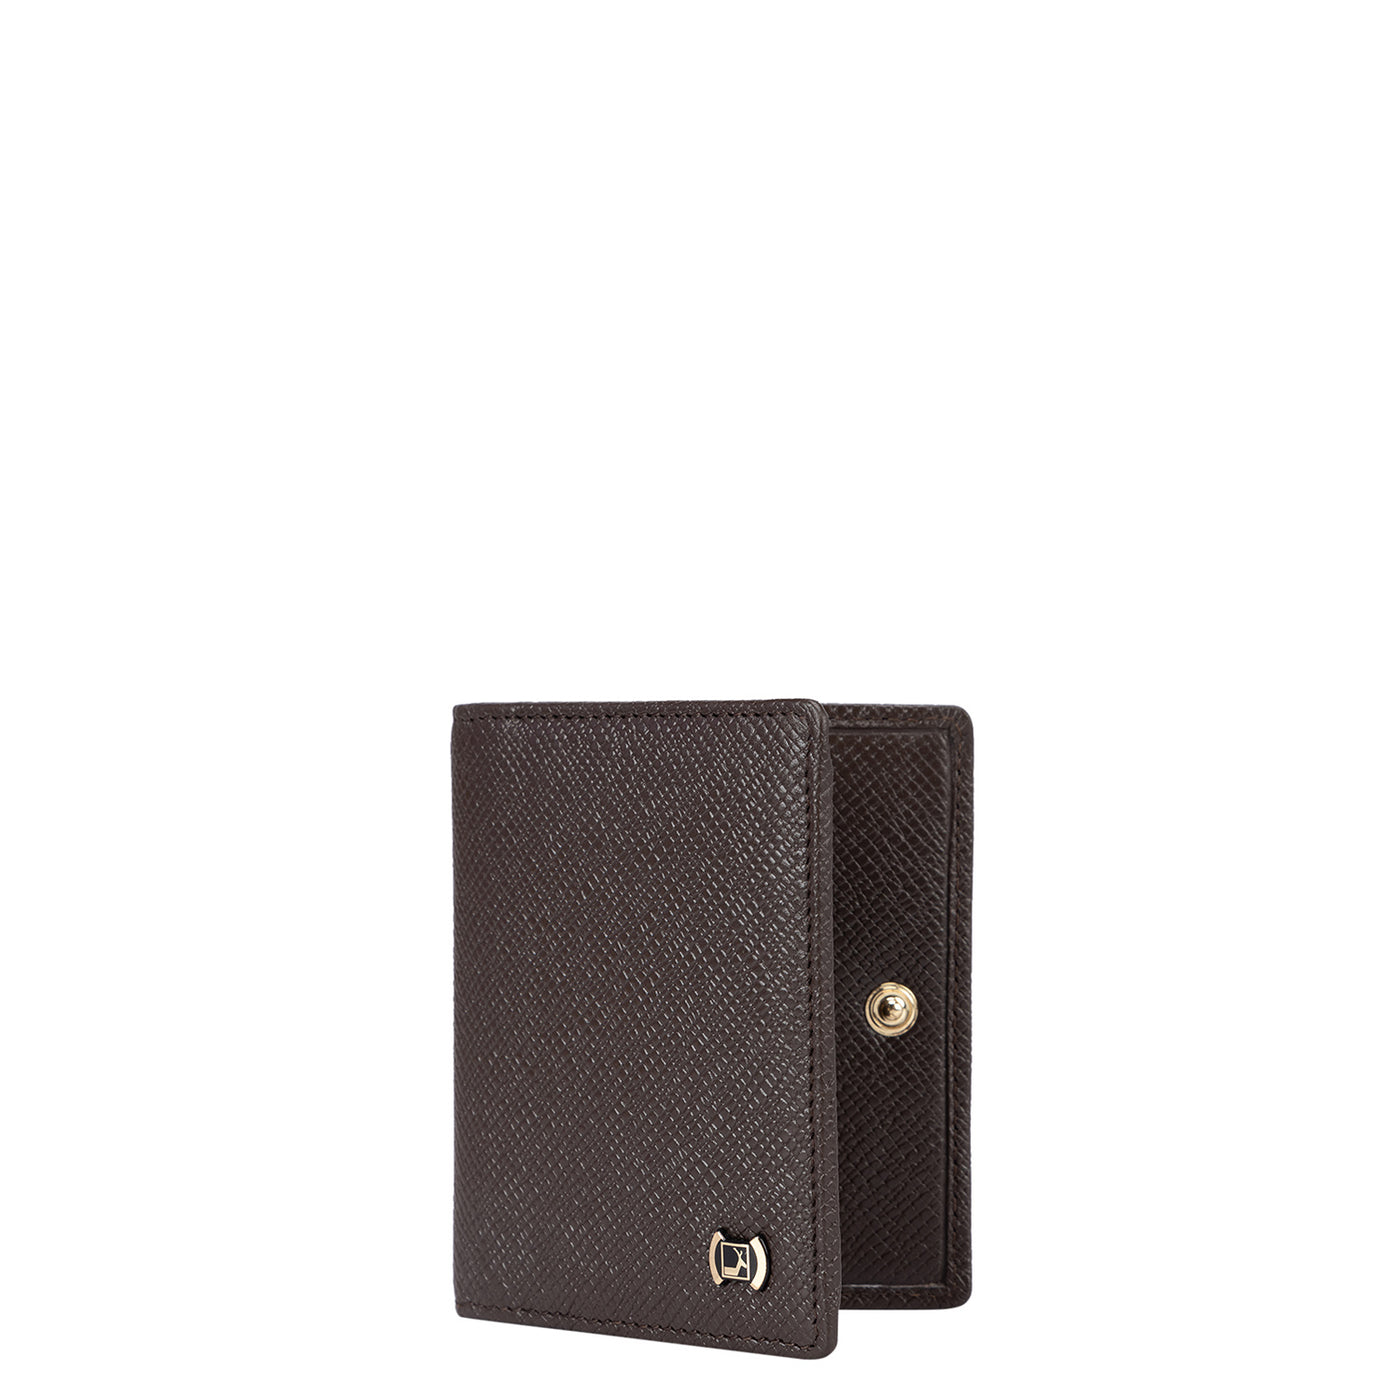 Franzy Leather Card Case - Oak